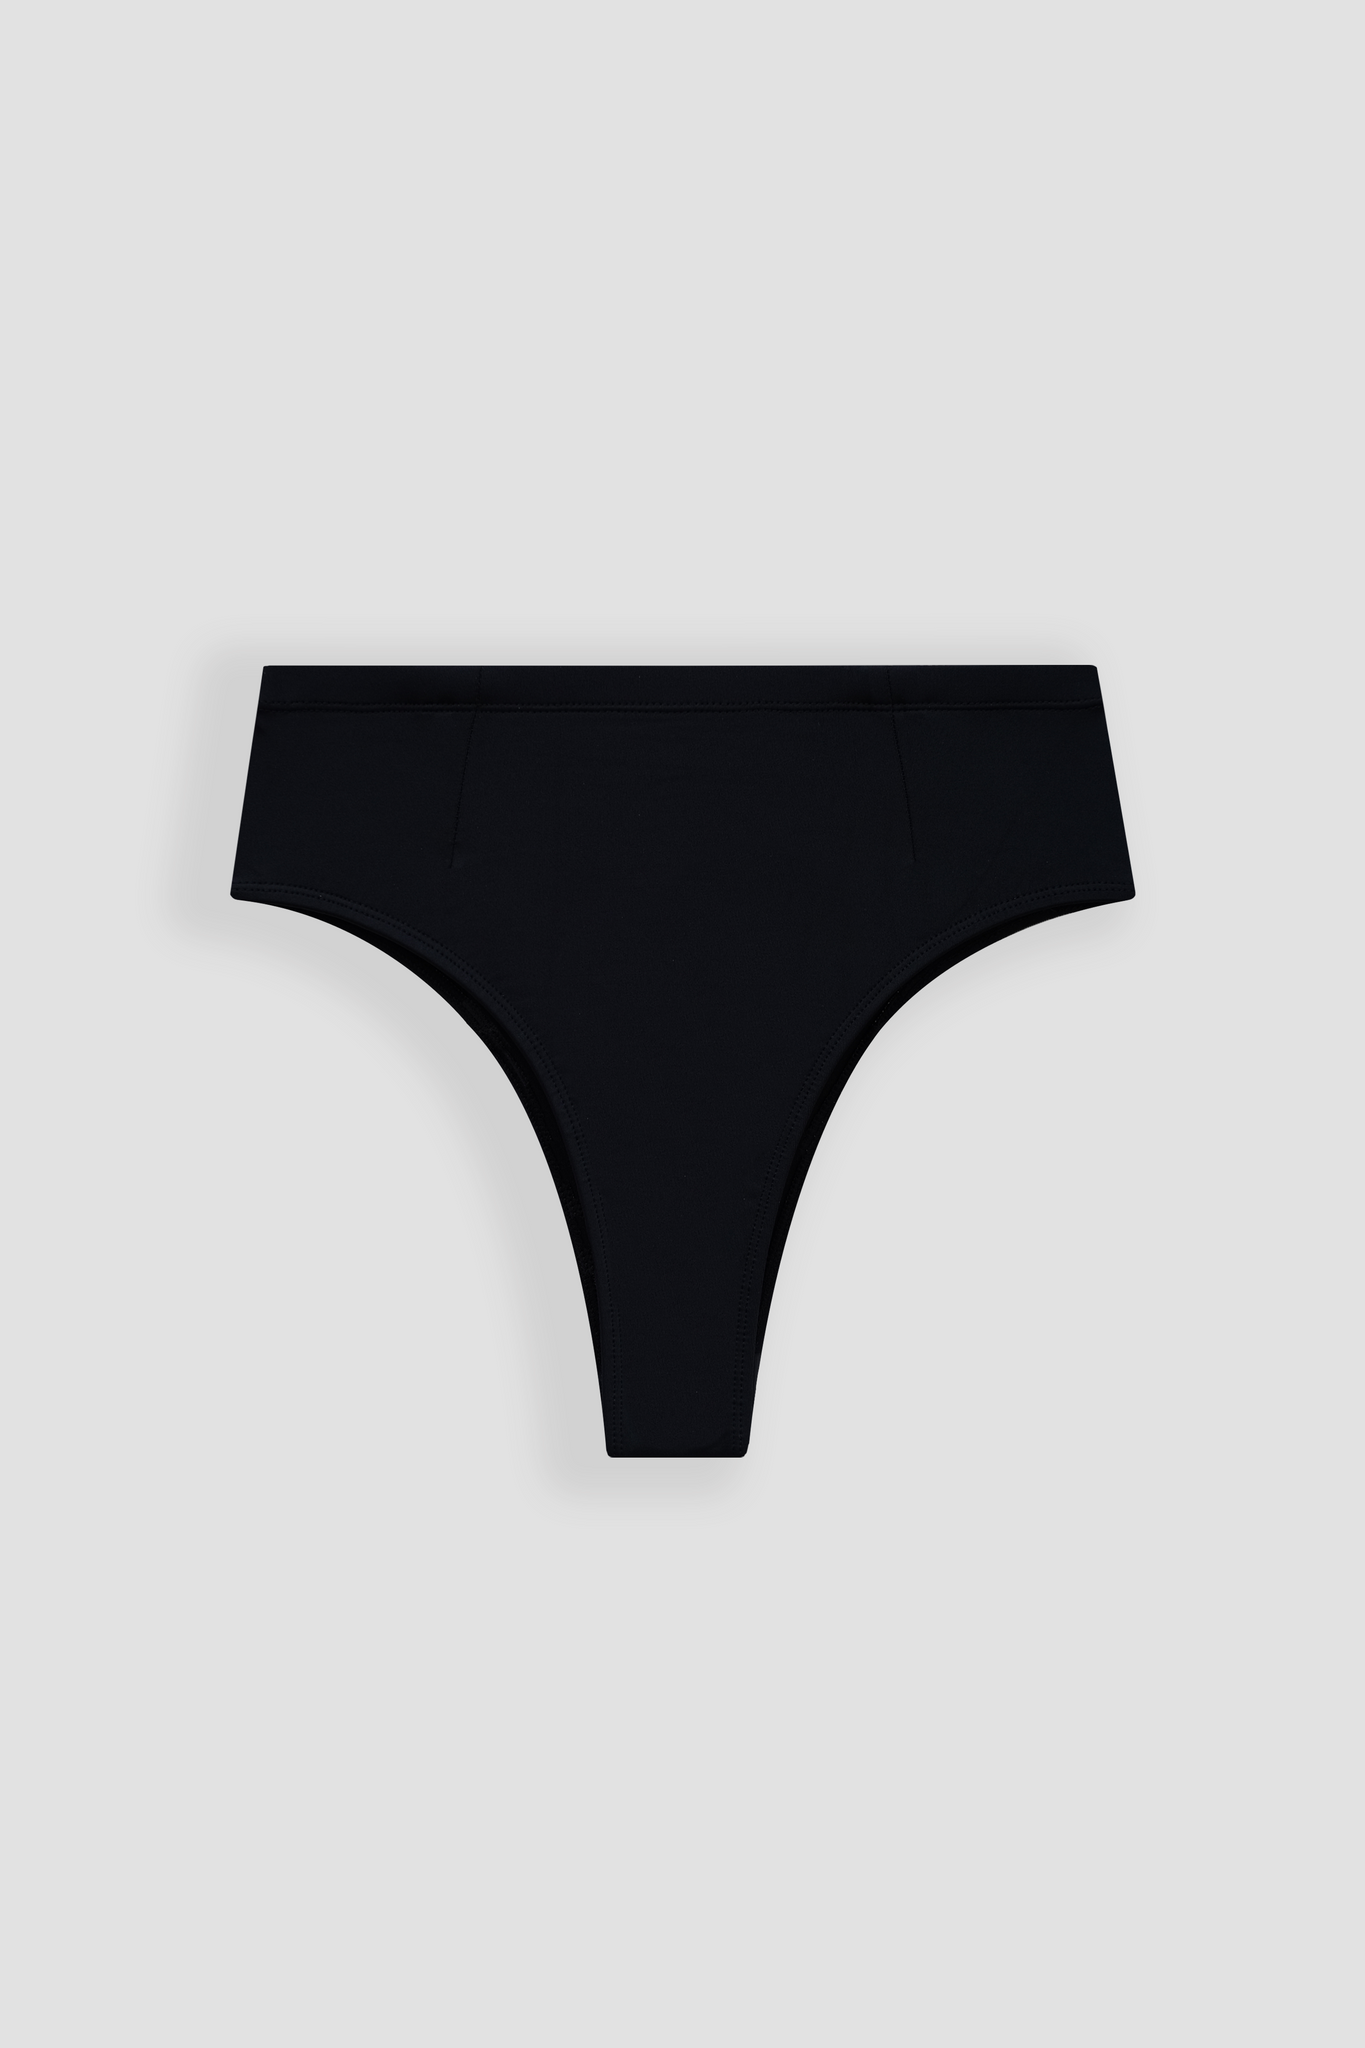 Ninefoot Studio Nyang-Nyang Surf Bikini Bottom in Black | Bottoms